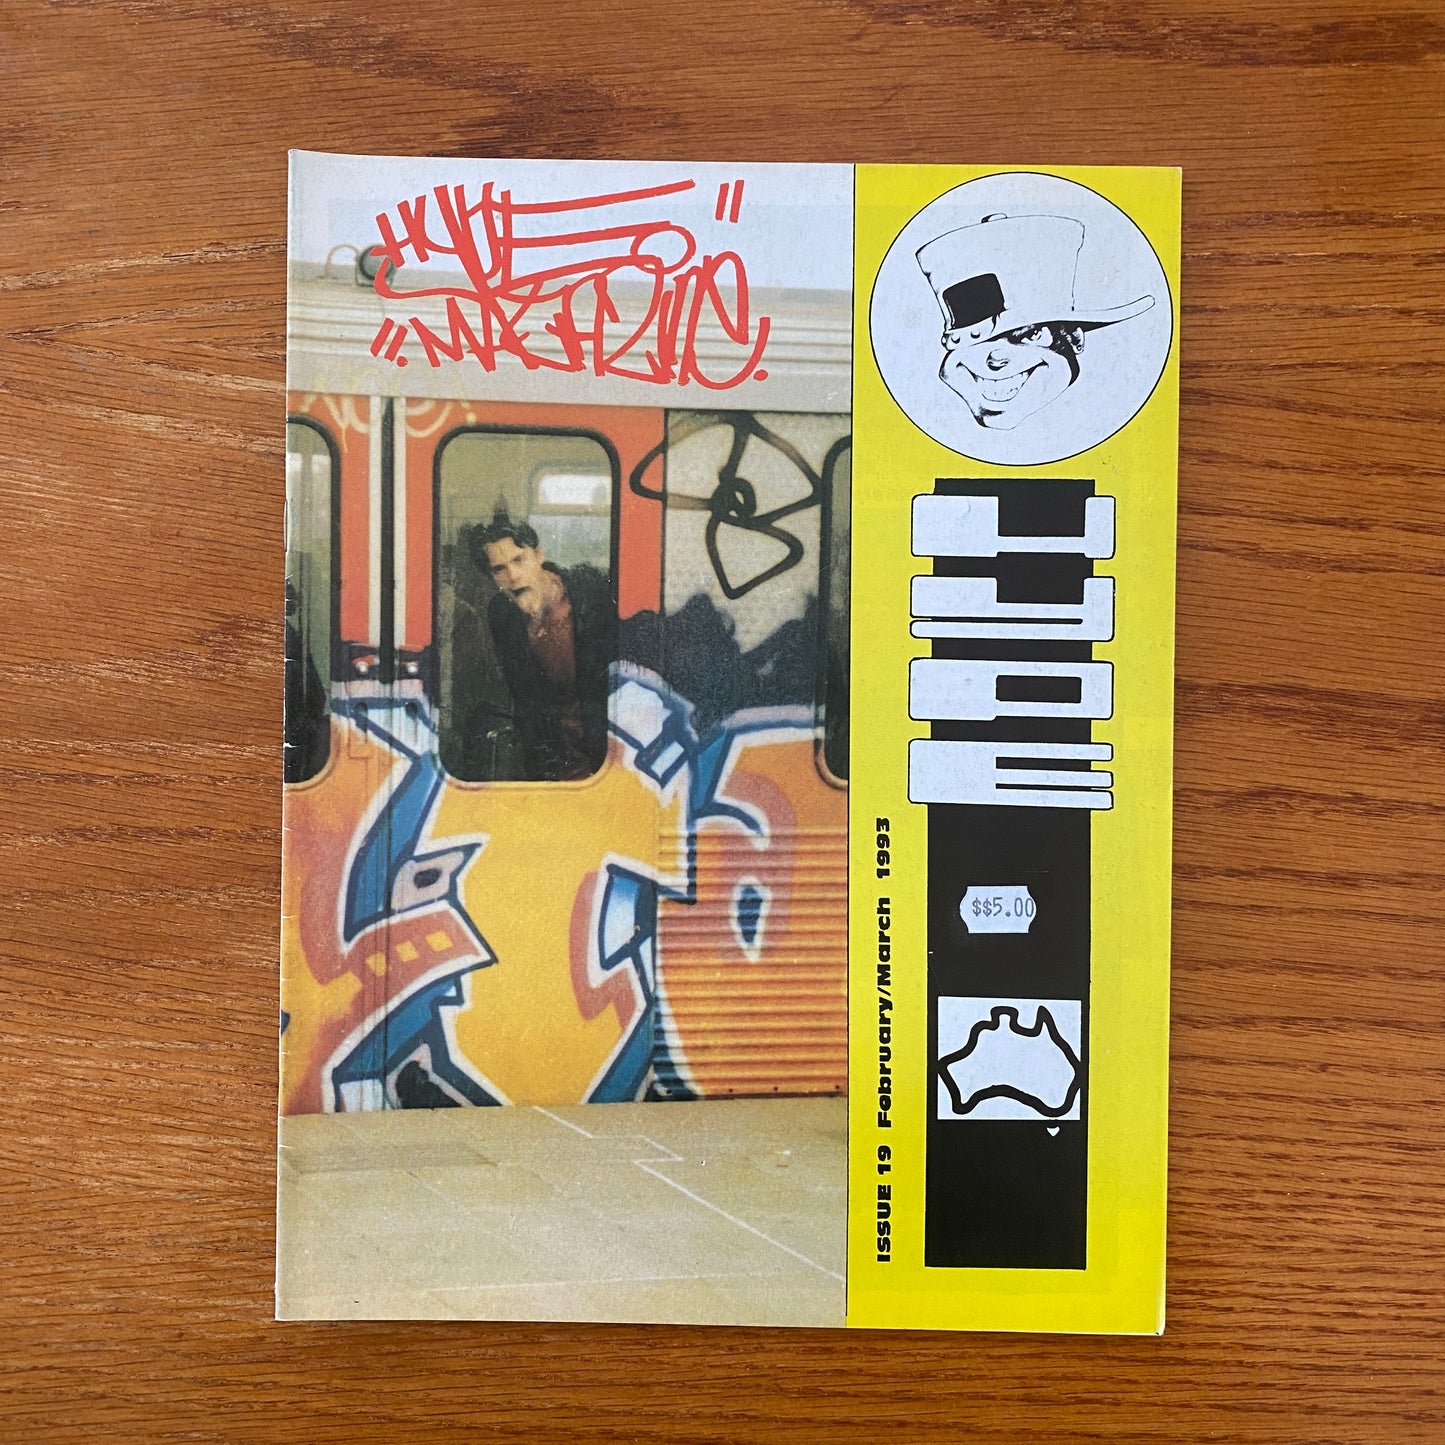 hype magazine - rumor books - Australian graffiti - oz graff